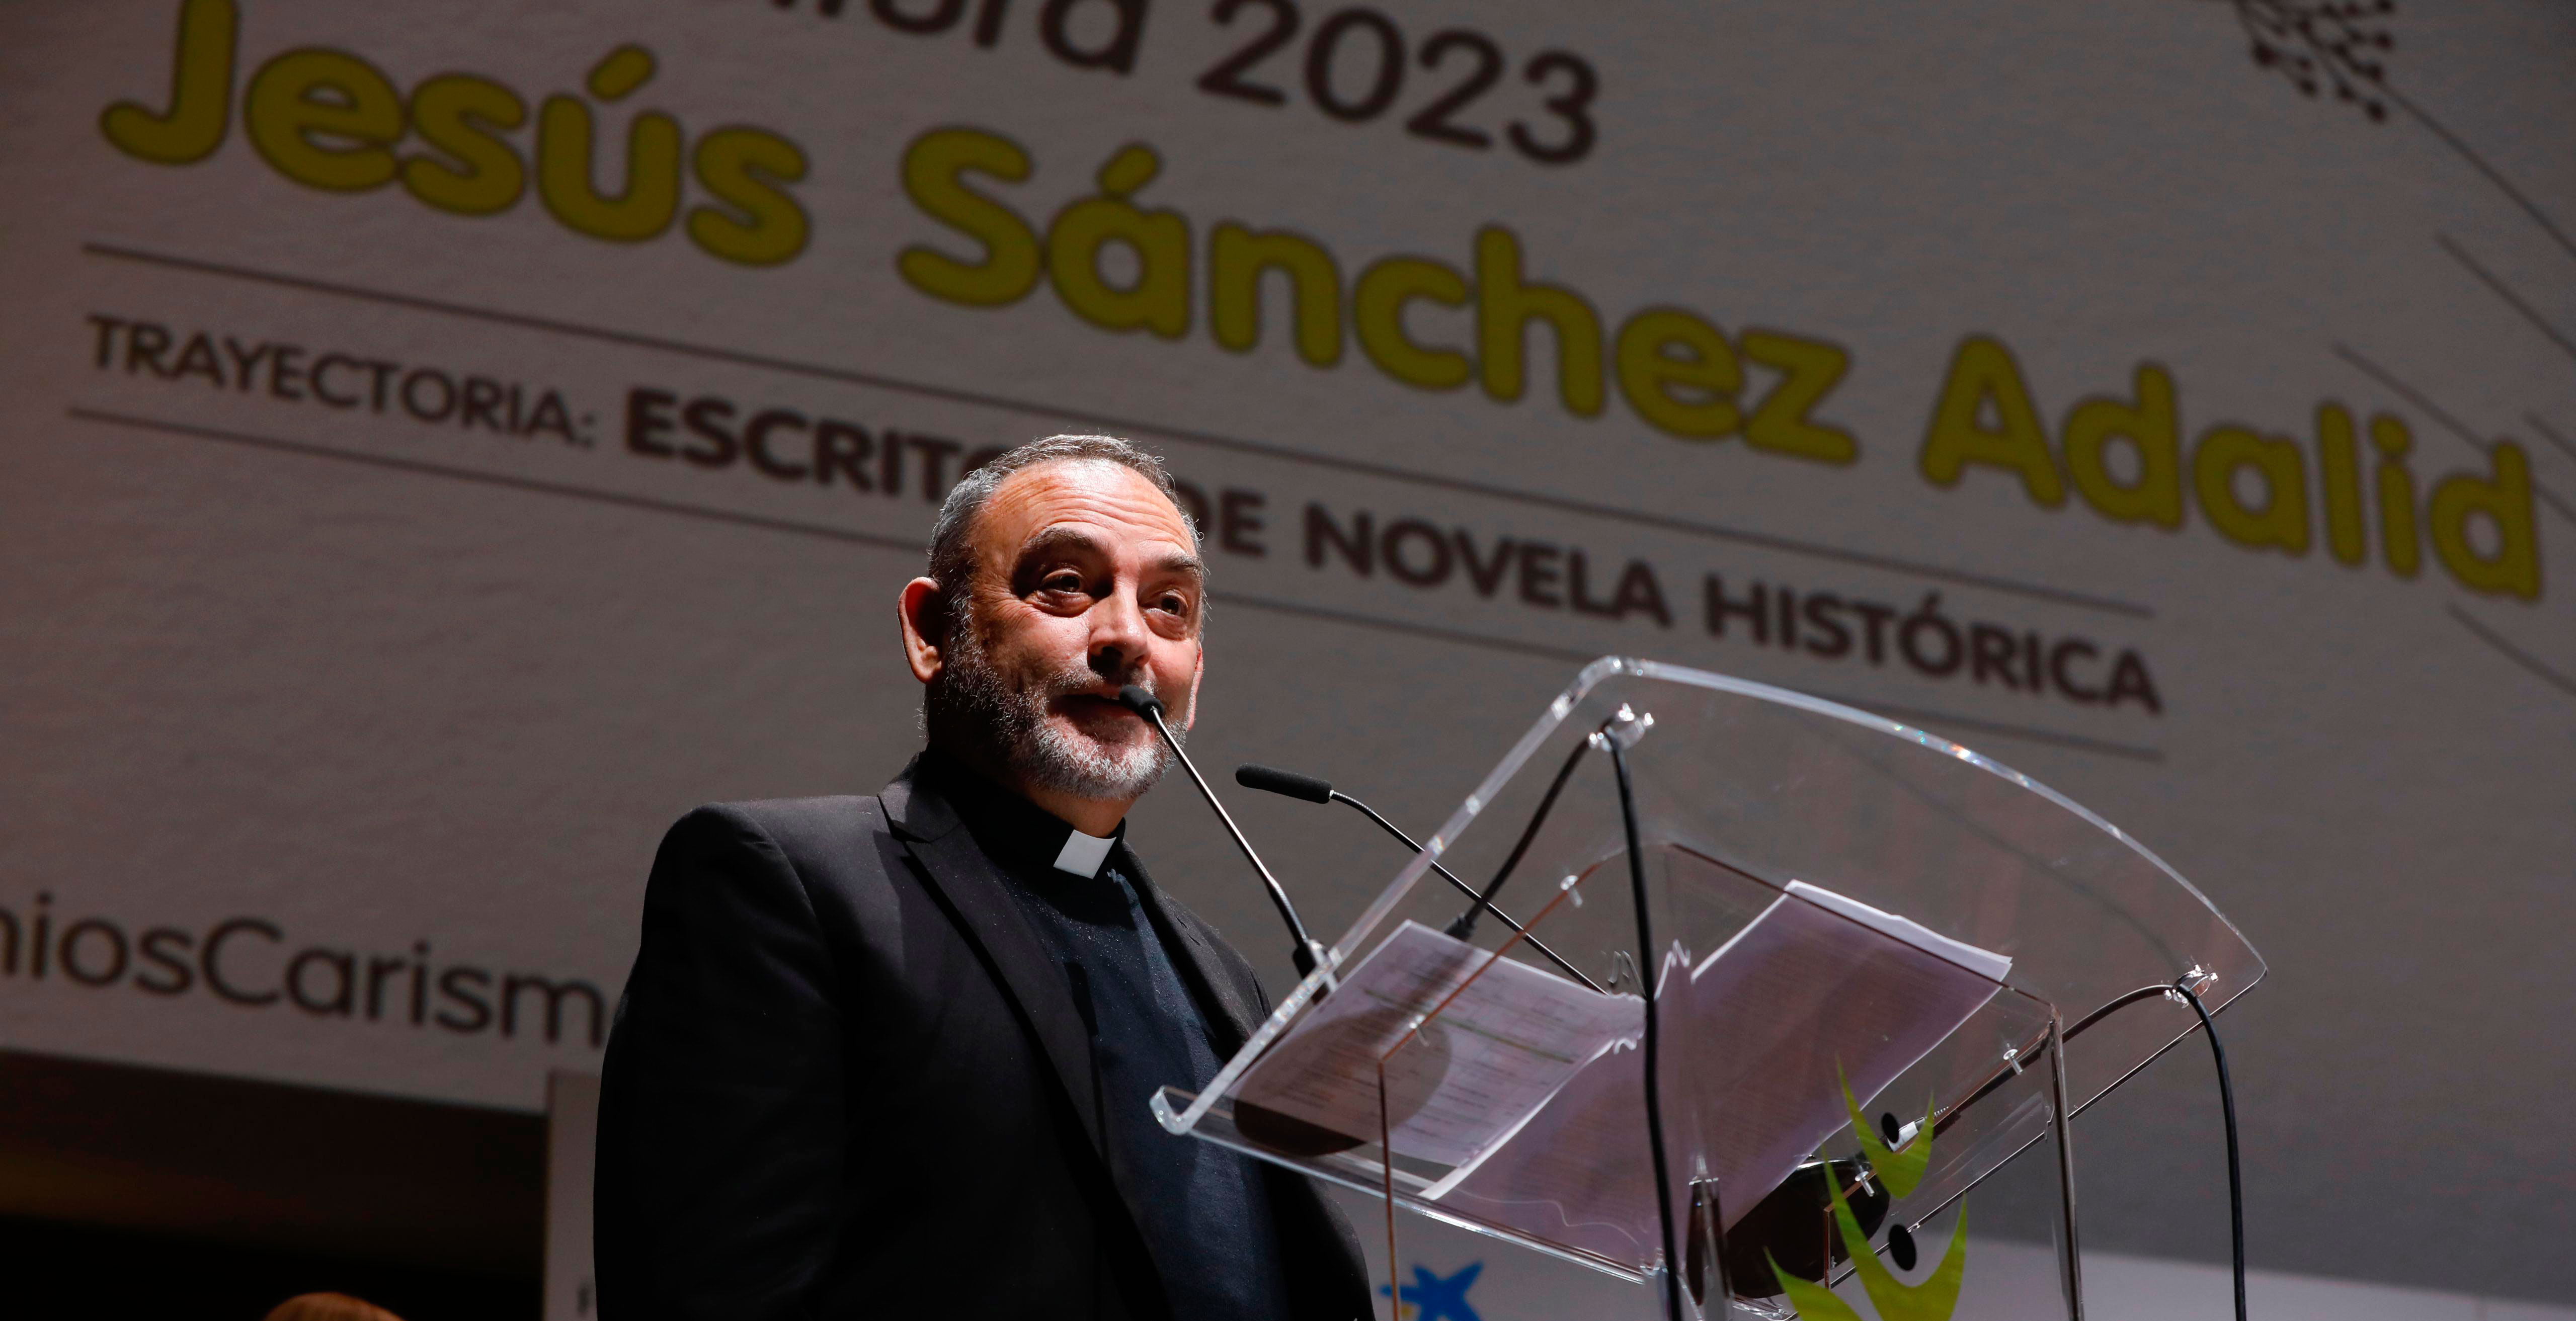 Jesús Sánchez Adalid Premio Carisma